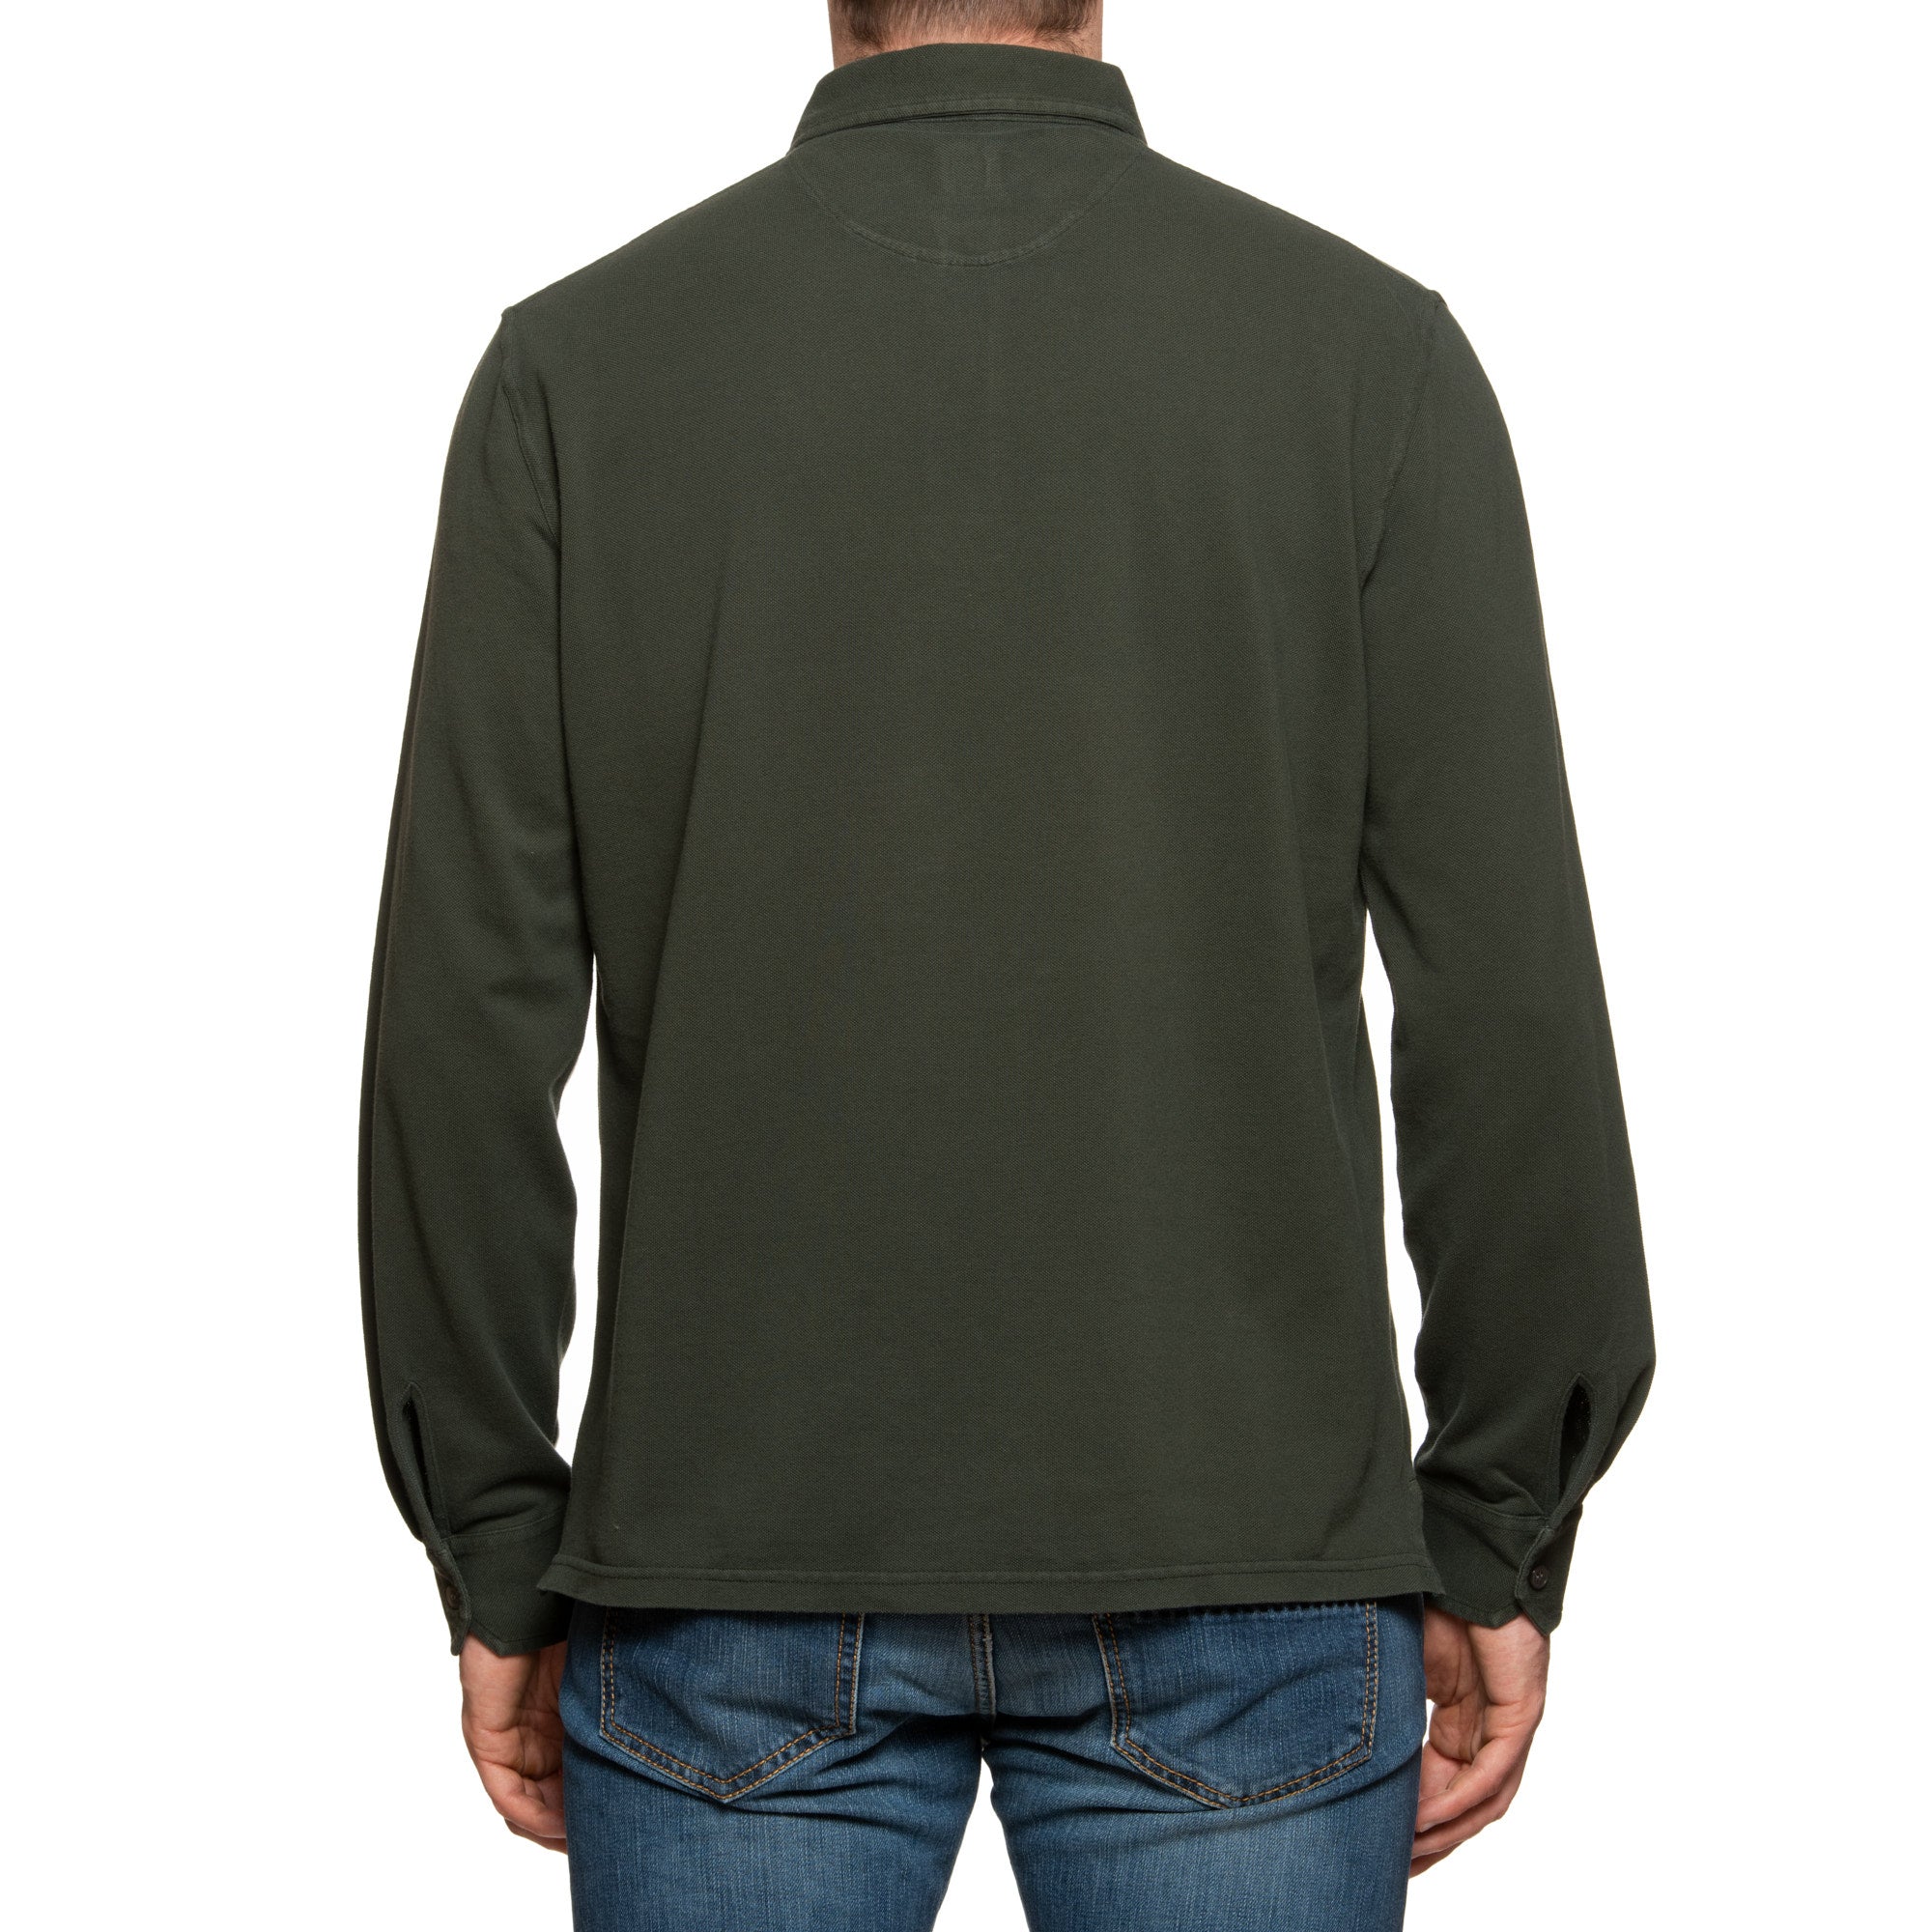 FEDELI "North" Army Green Cotton Pique Long Sleeve Polo Shirt NEW FEDELI